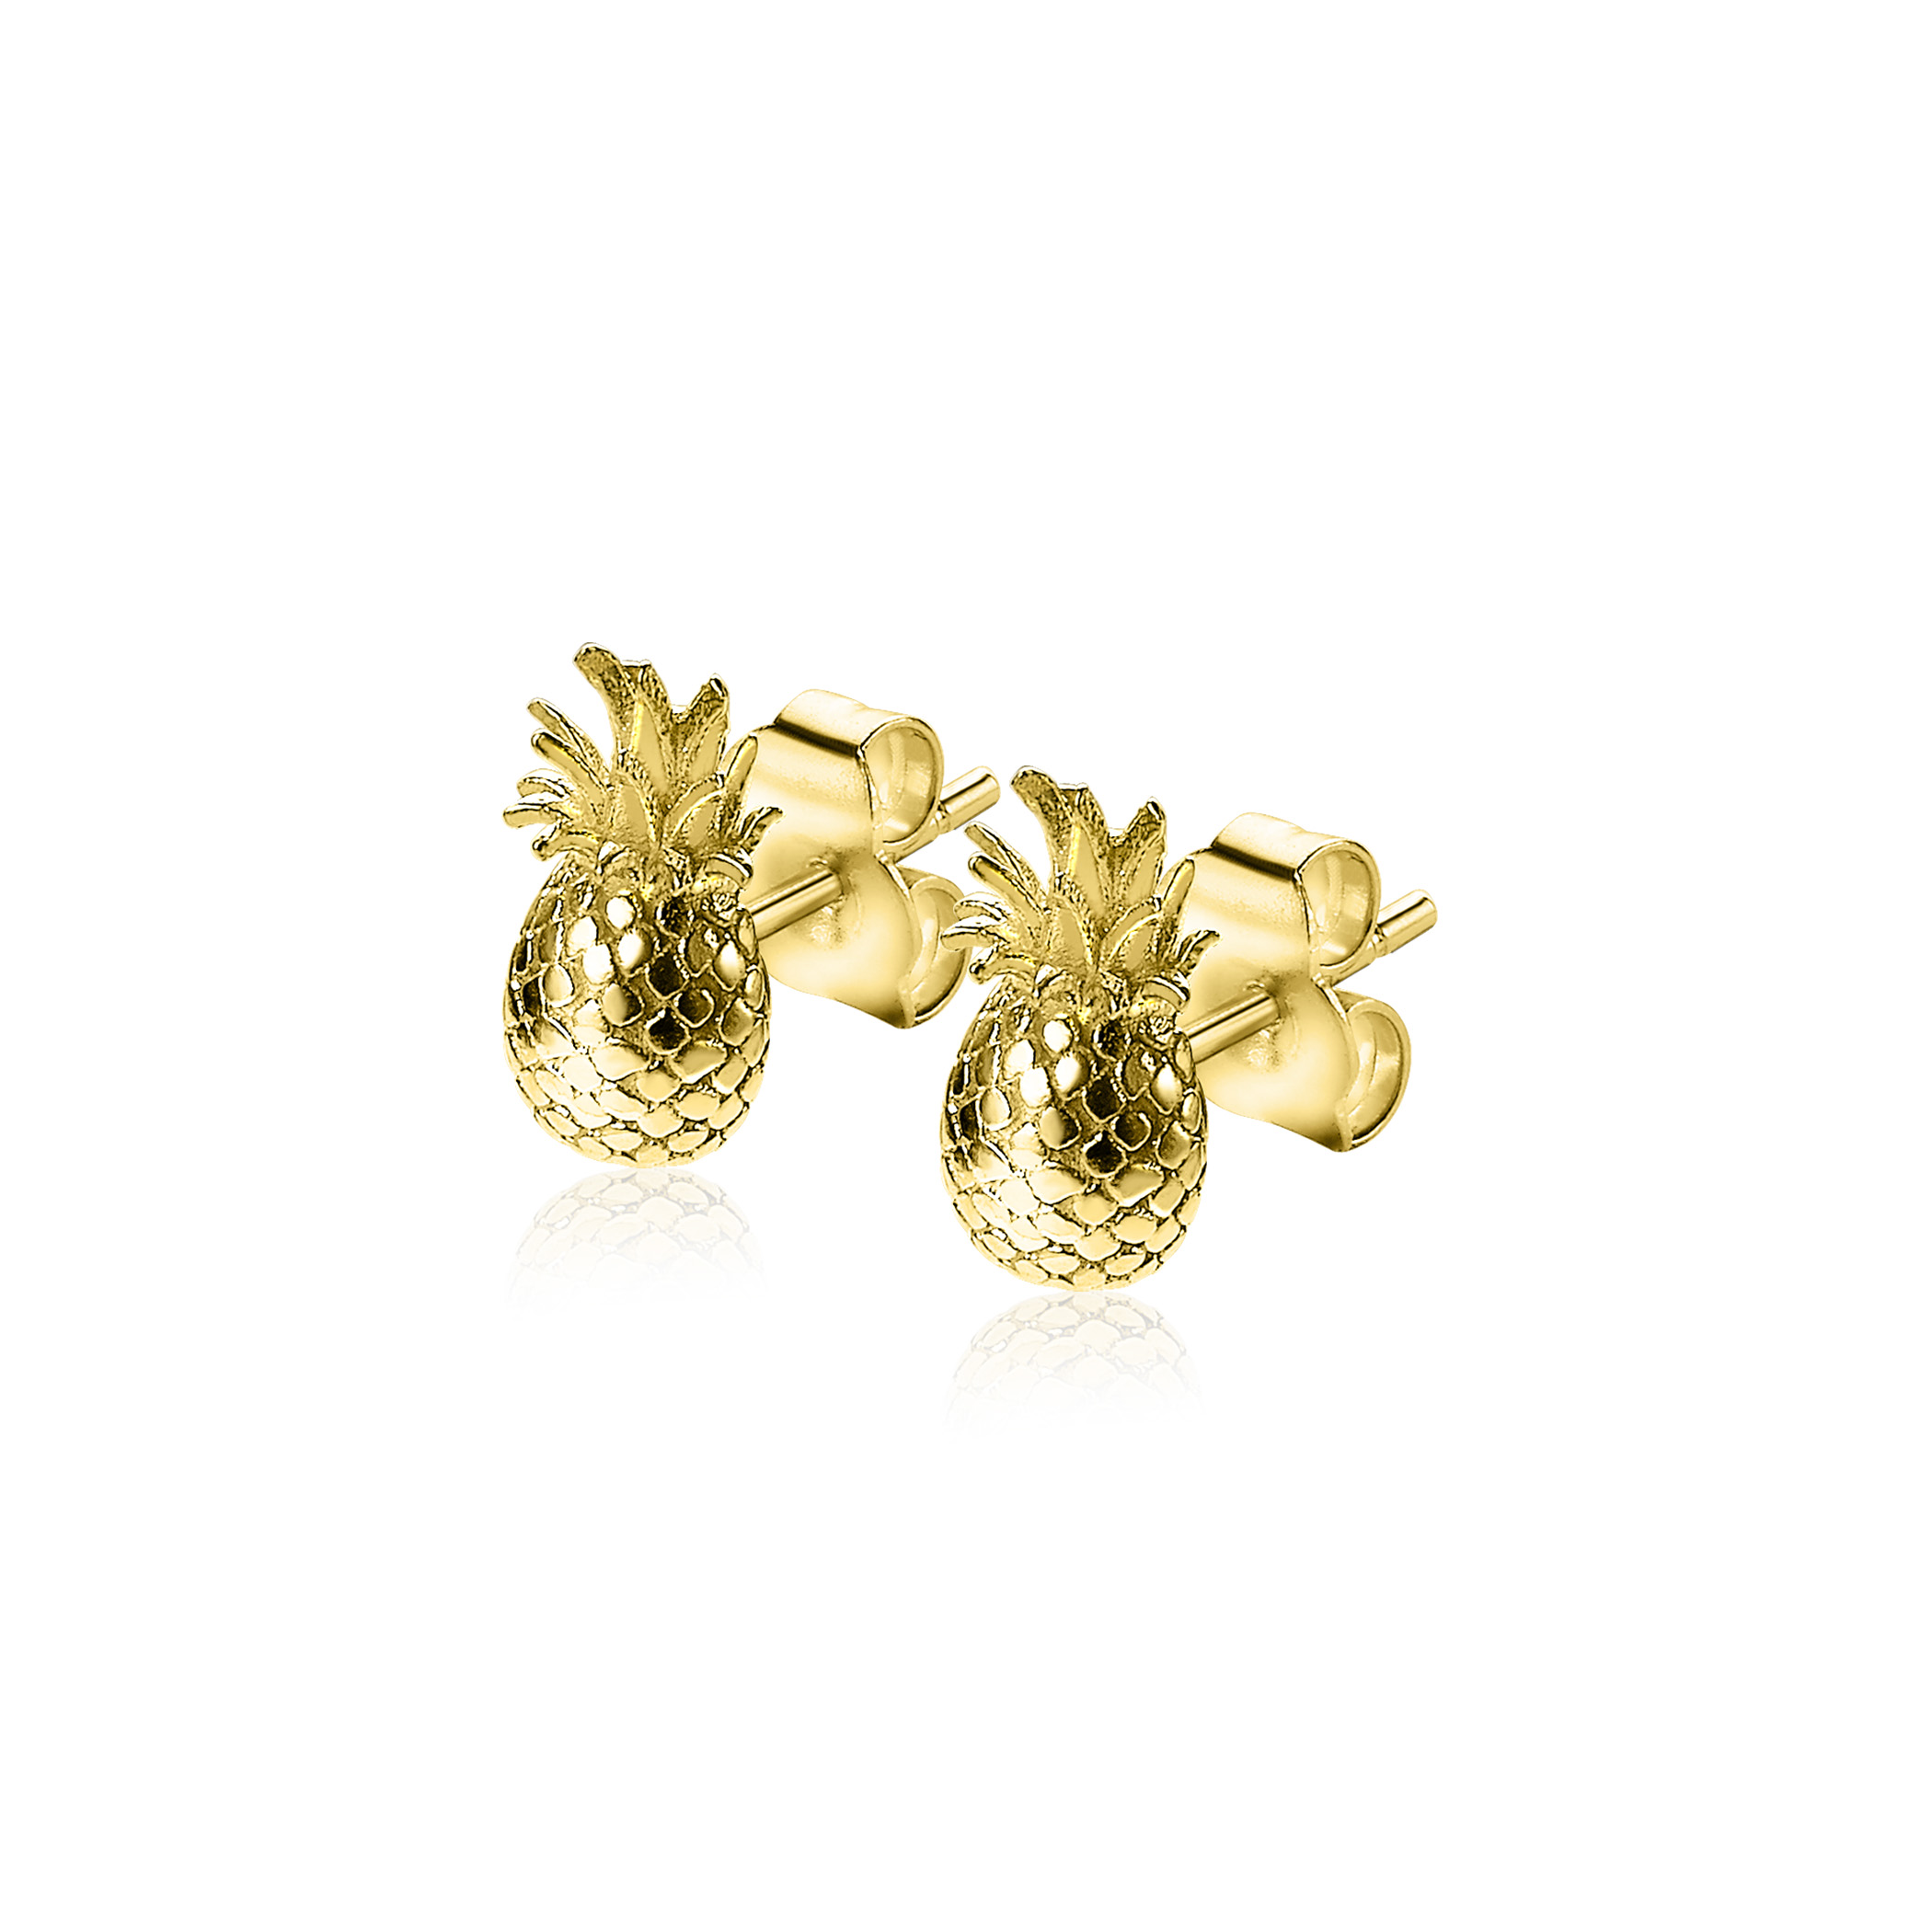 ZINZI Gold Plated Sterling Silver Stud Earrings Pineapple ZIO1699G